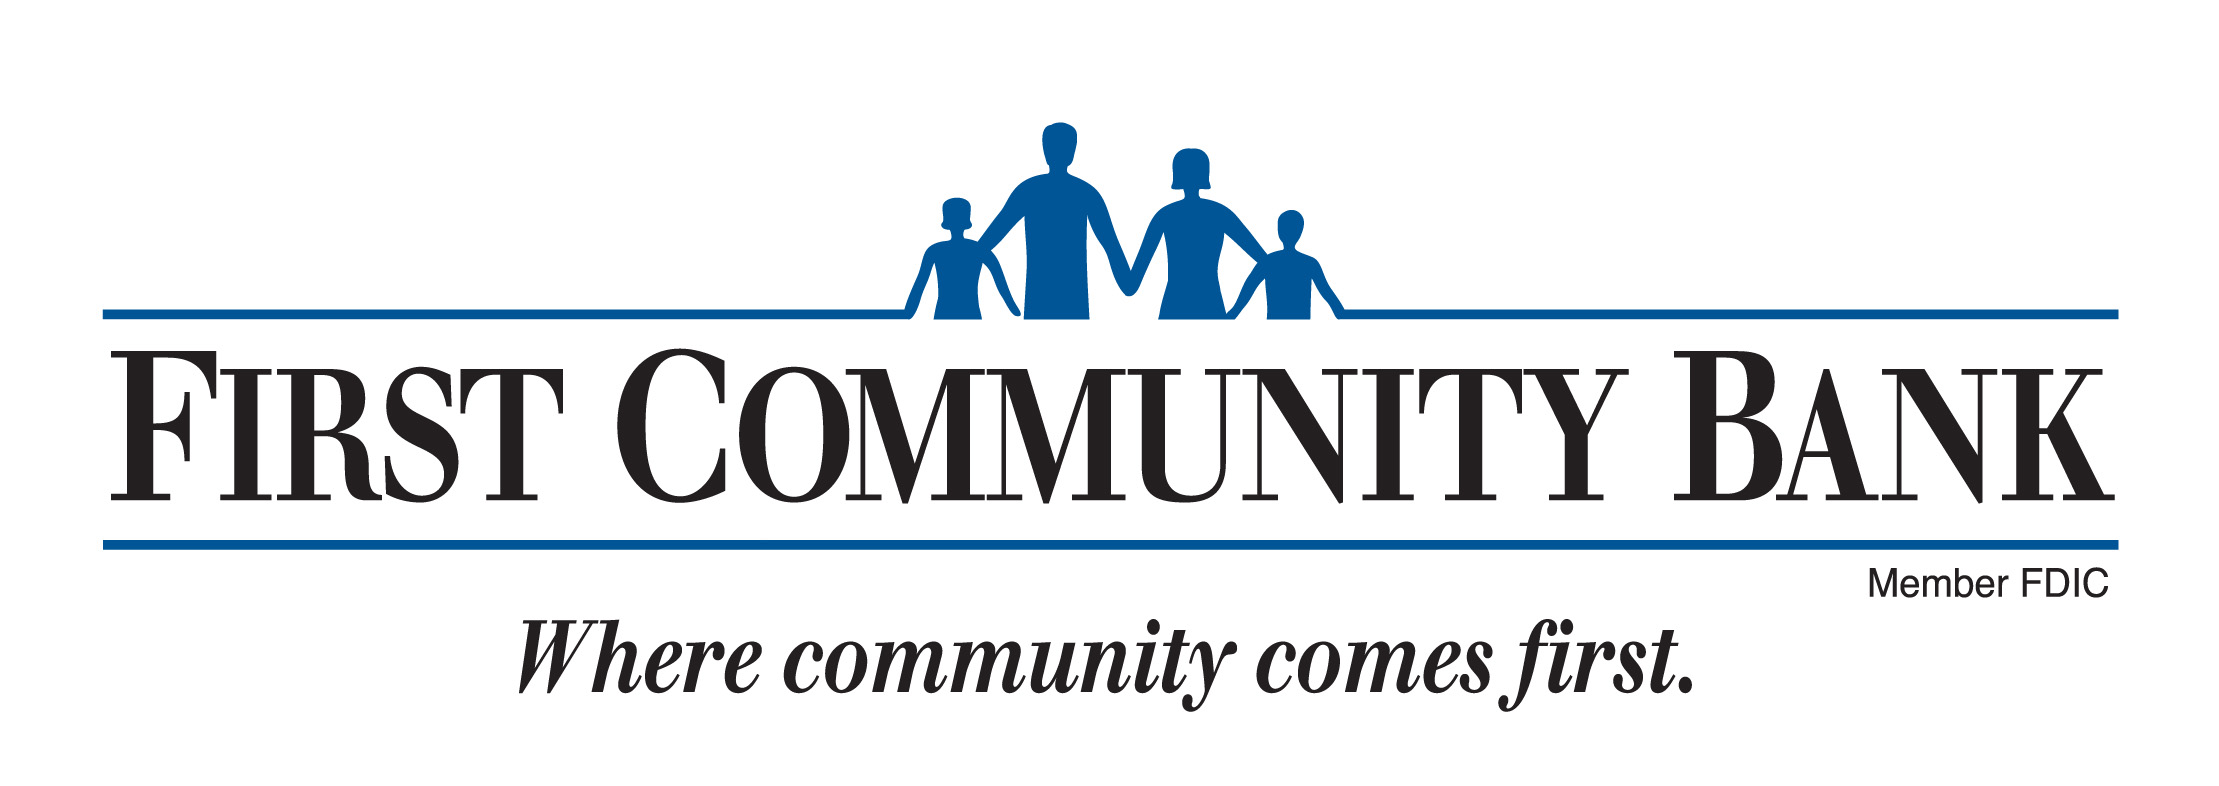 first-community-bank-logo-1.jpg